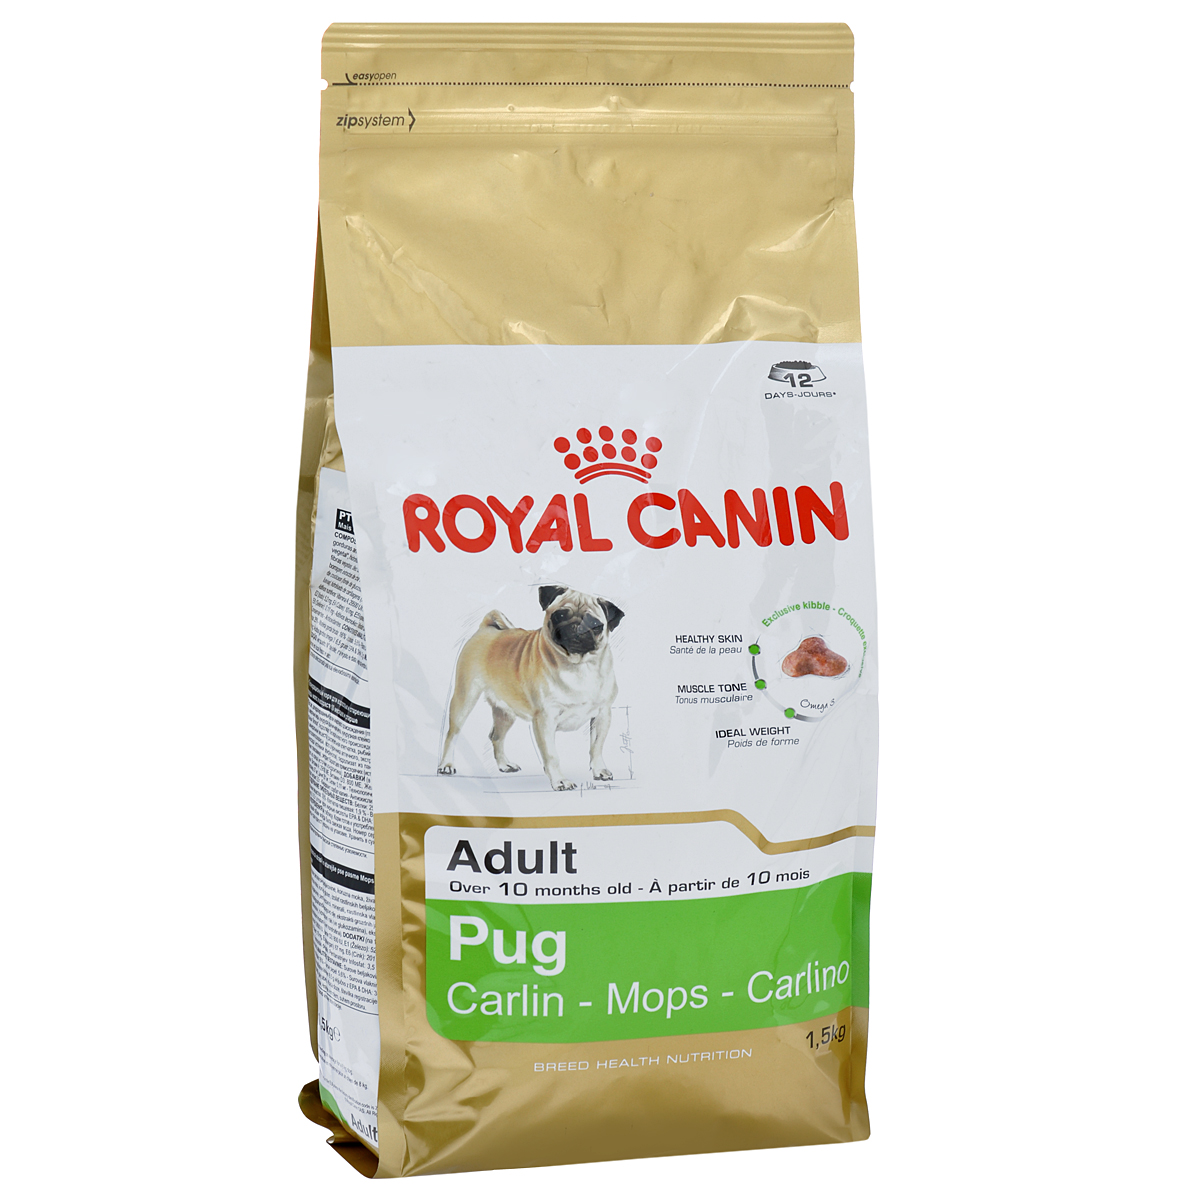   Royal Canin Pug Adult ,      10 , 1,5  - Royal Canin2404  Royal Canin Pug Adult  -        10 .  -    .                .           :          ,         .  .        .  .        .  .             .   .    ,        . : ,...